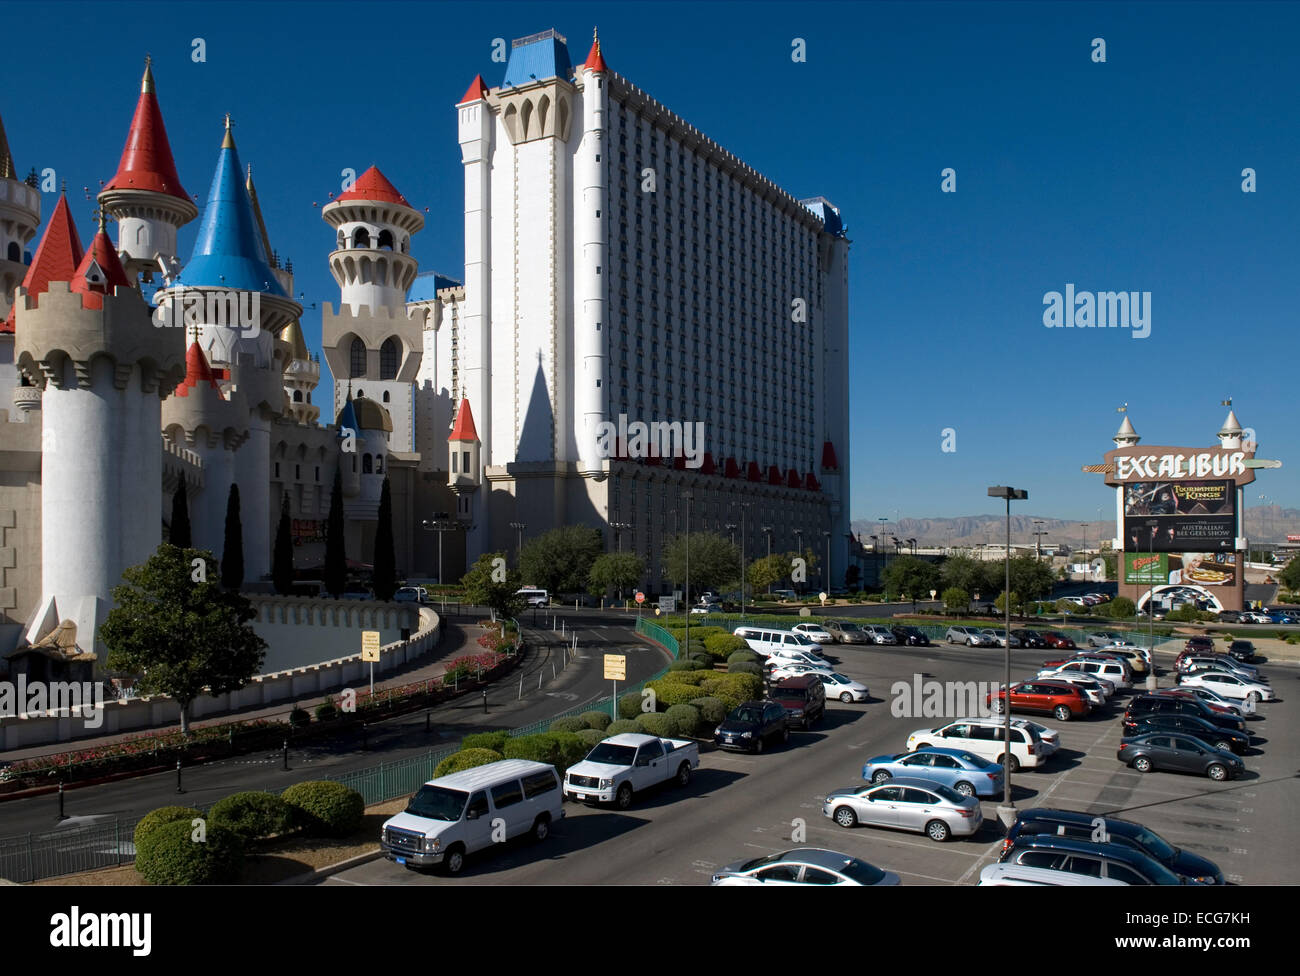 Excalibur Hotel Casino Las Vegas Nevada USA Stock Photo - Alamy